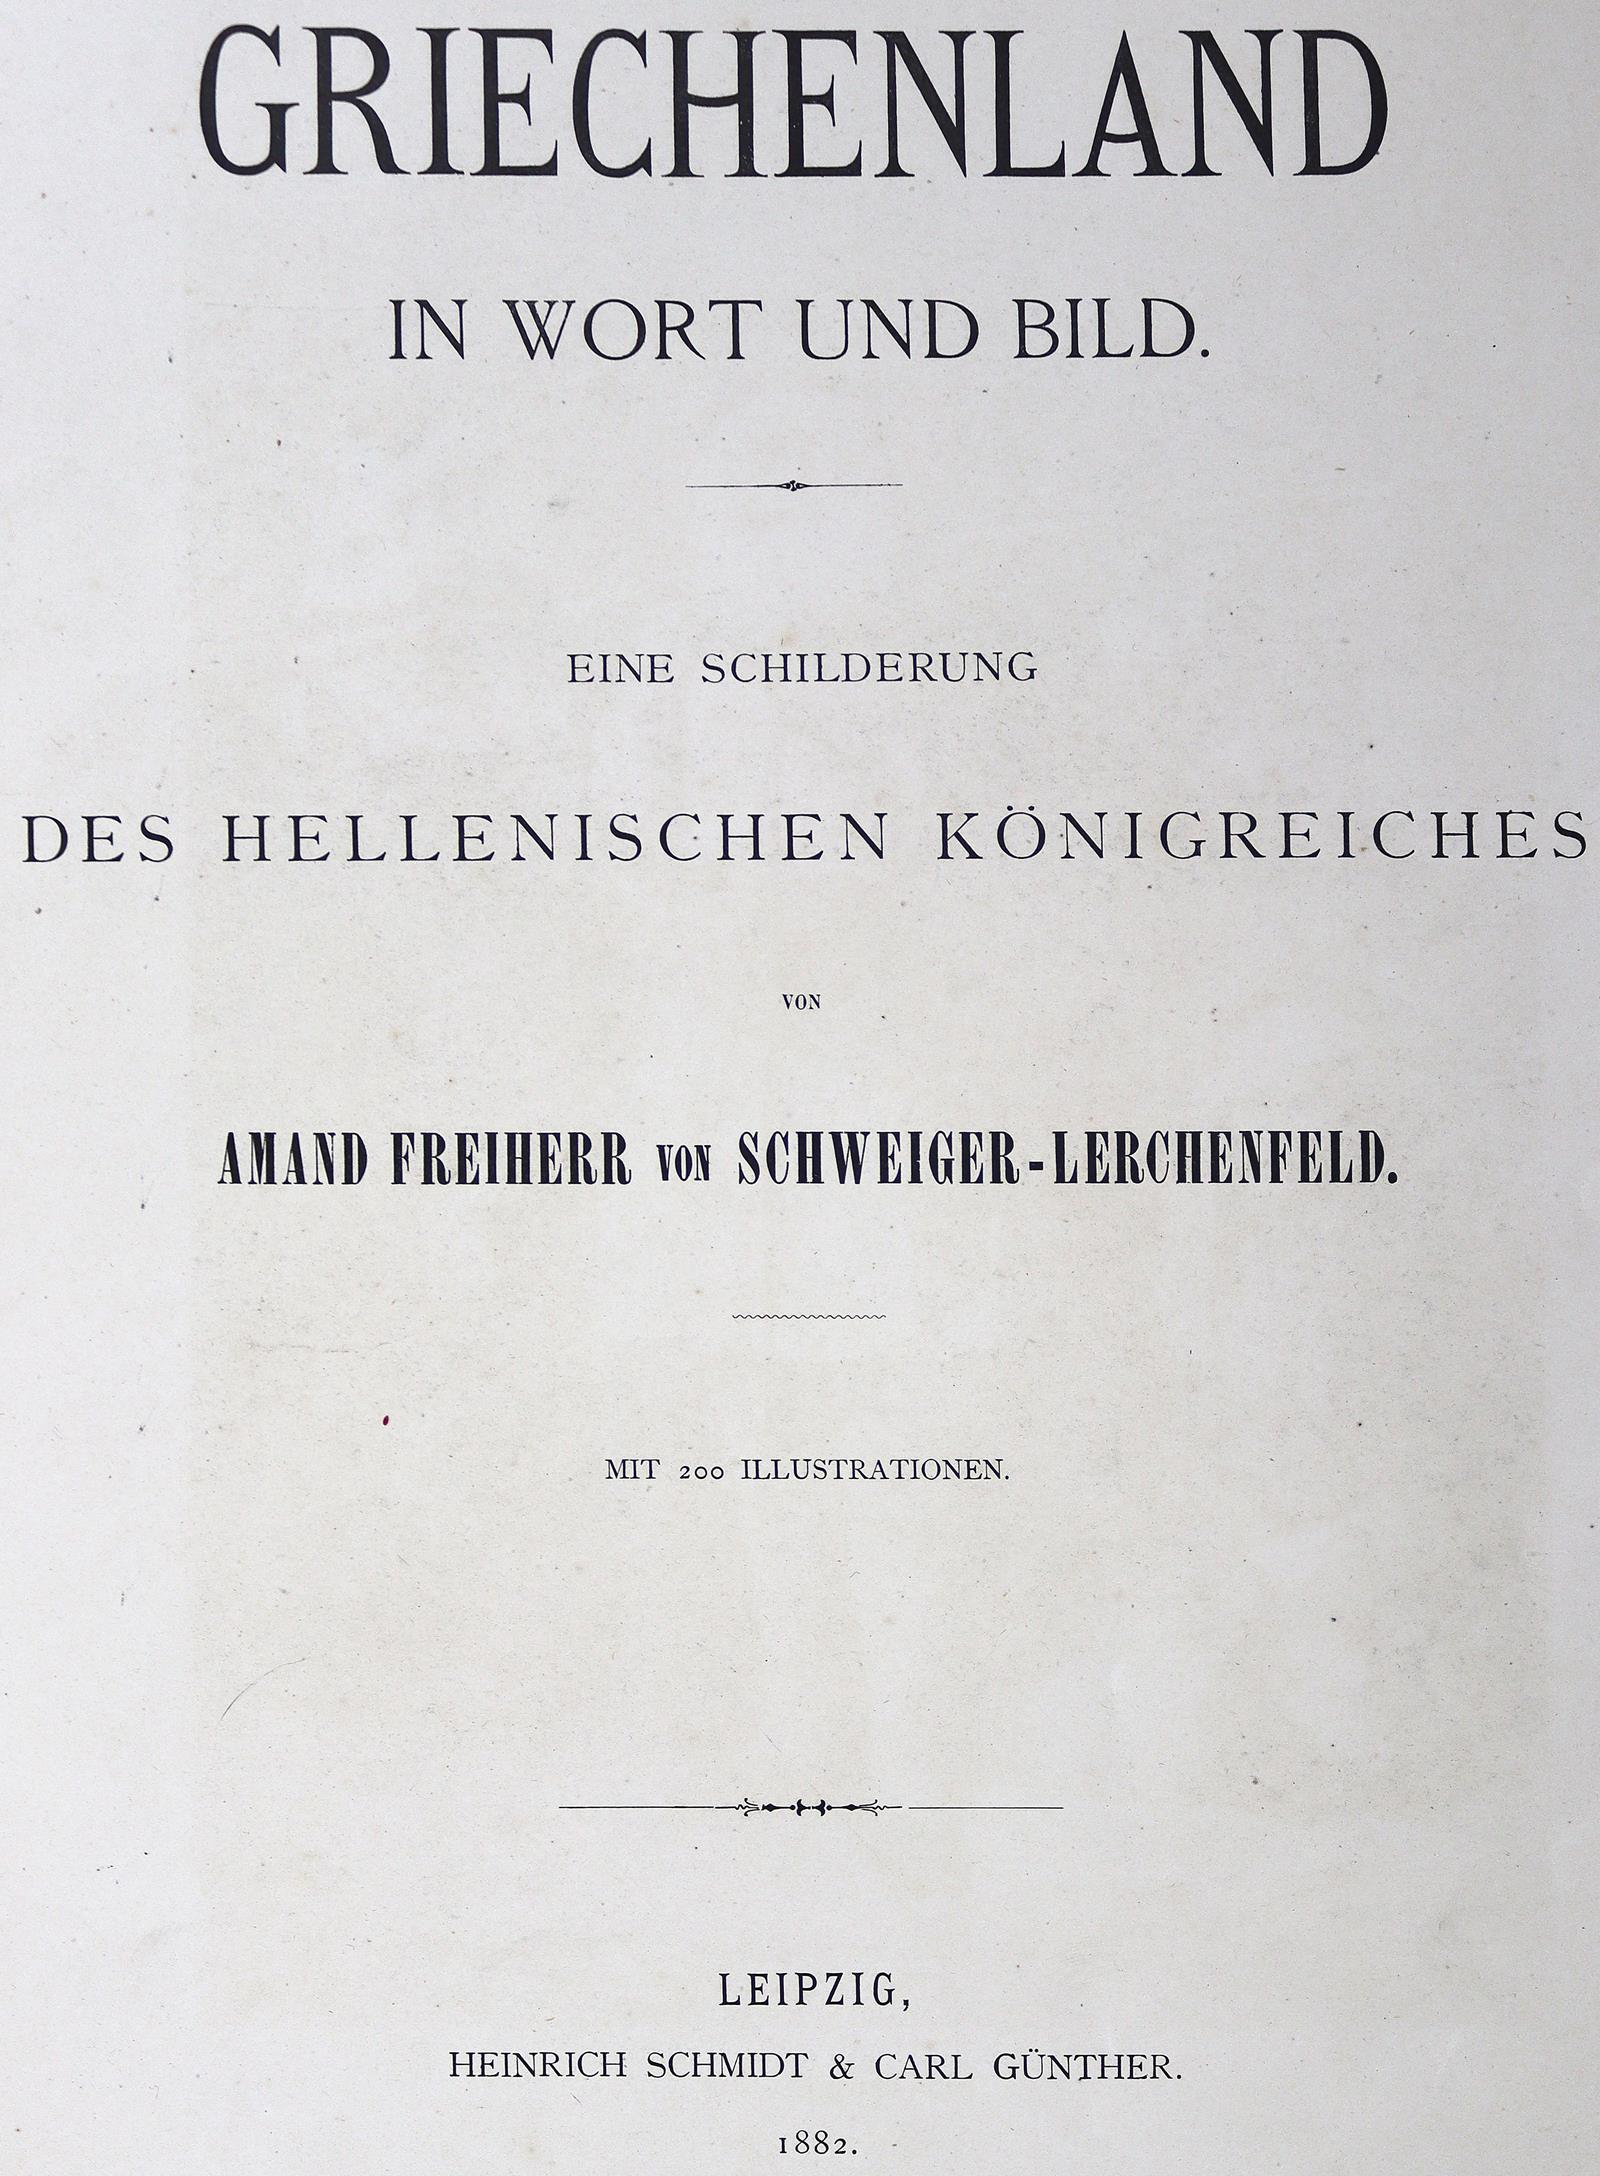 Schweiger-Lerchenfeld,A.v. | Bild Nr.2